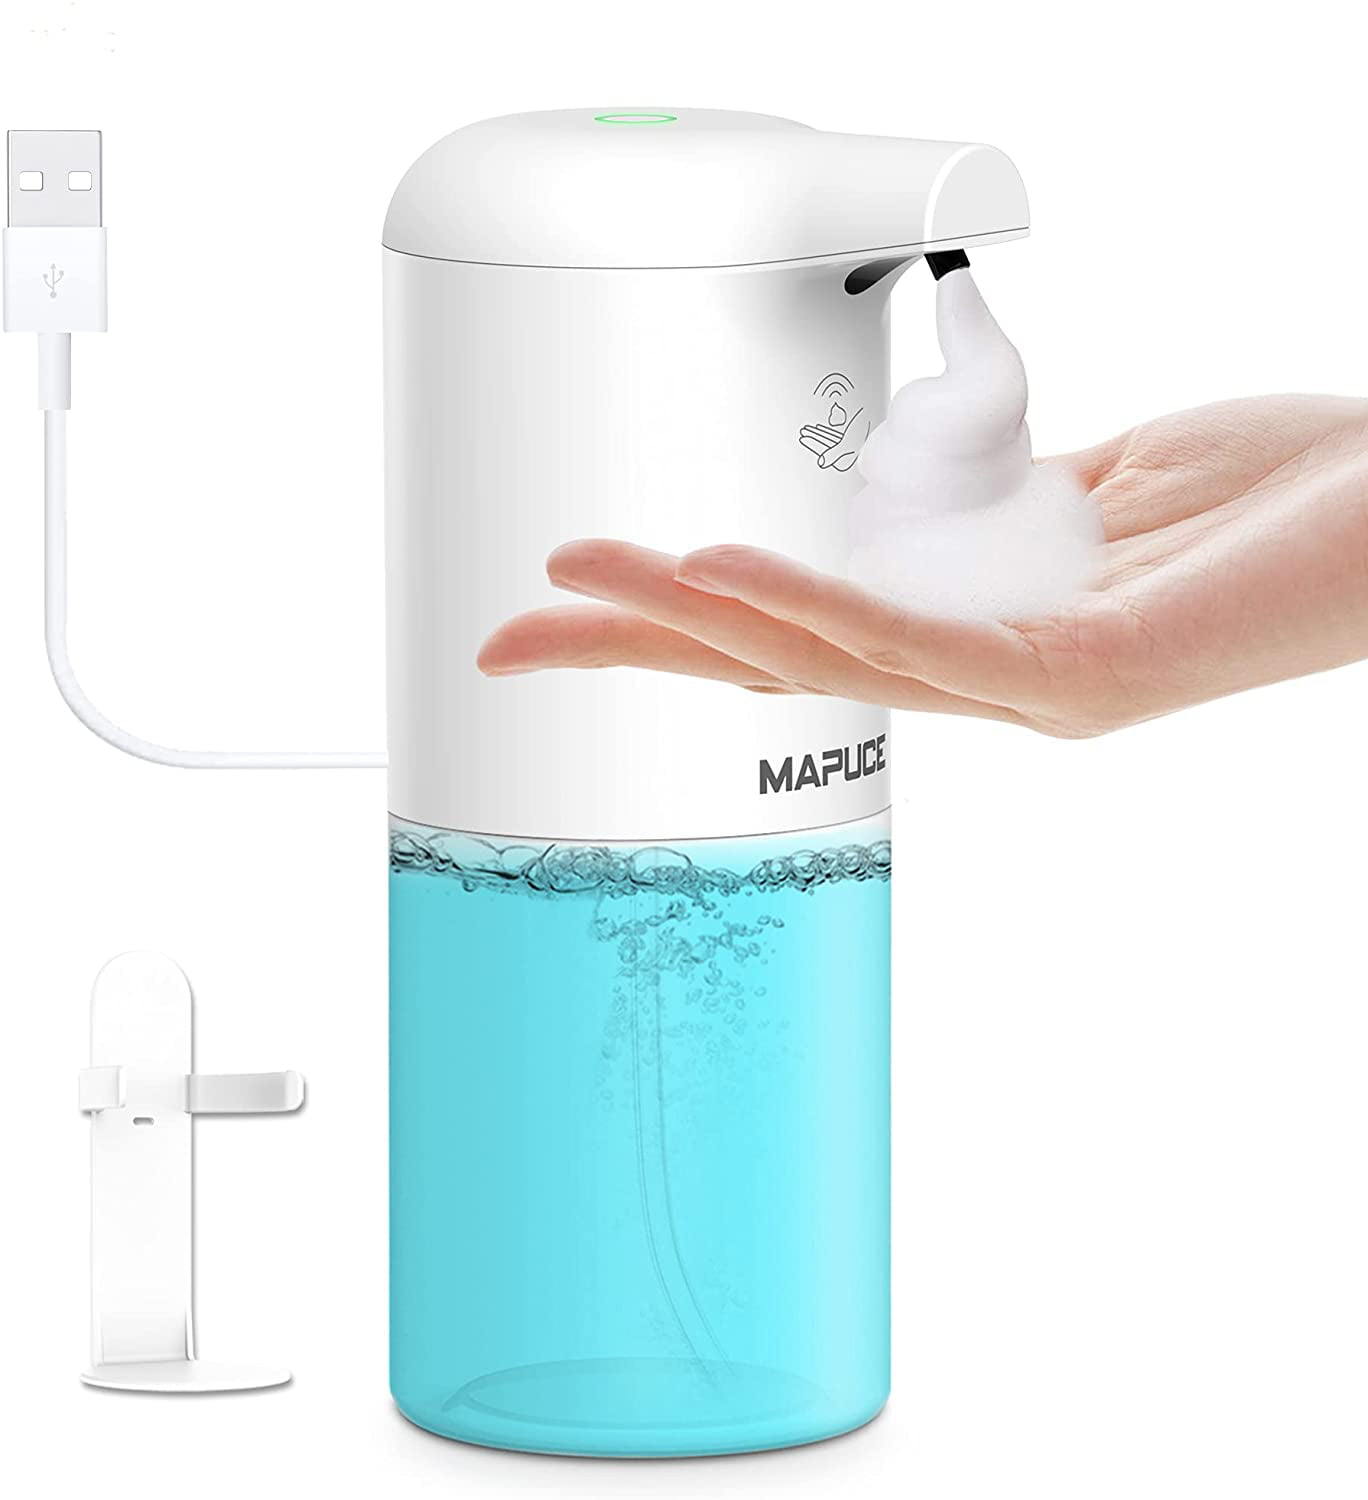 Foaming Soap Dispenser Automatic Hand Dispenser Touch-less Kitchen Bath NEW